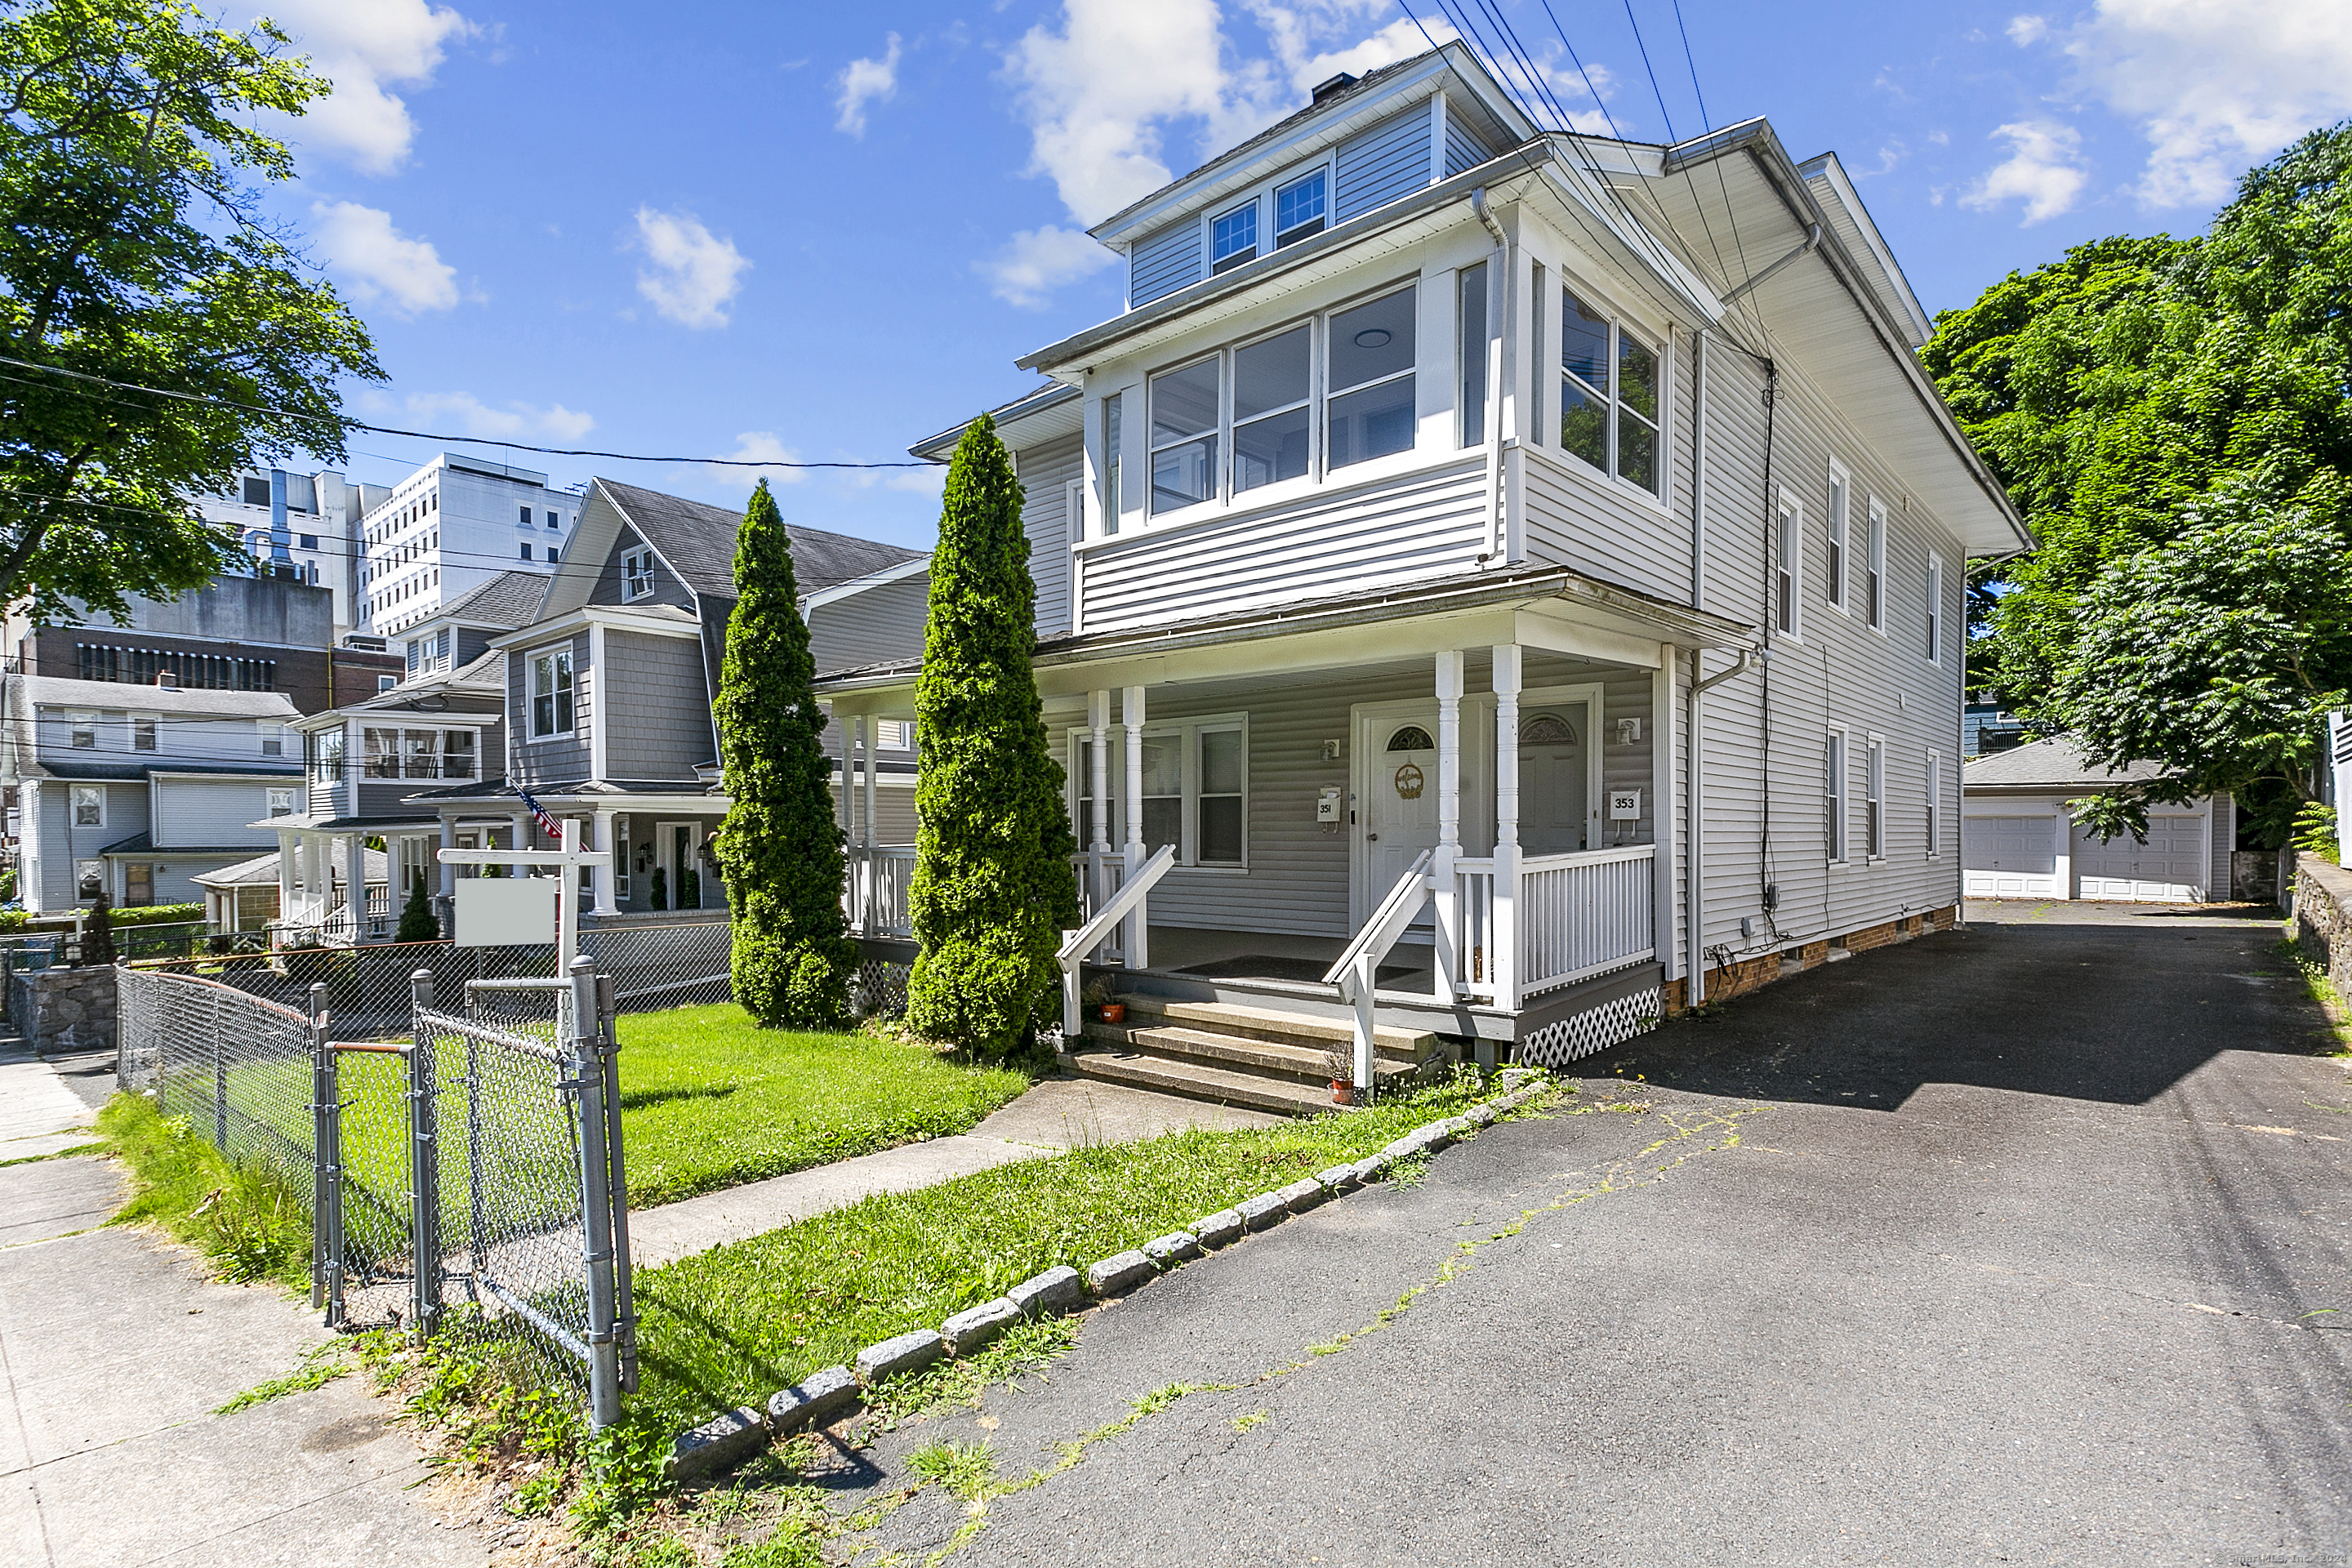 Property for Sale at 351 Gurdon Street, Bridgeport, Connecticut - Bedrooms: 6 
Bathrooms: 3 
Rooms: 12  - $564,900